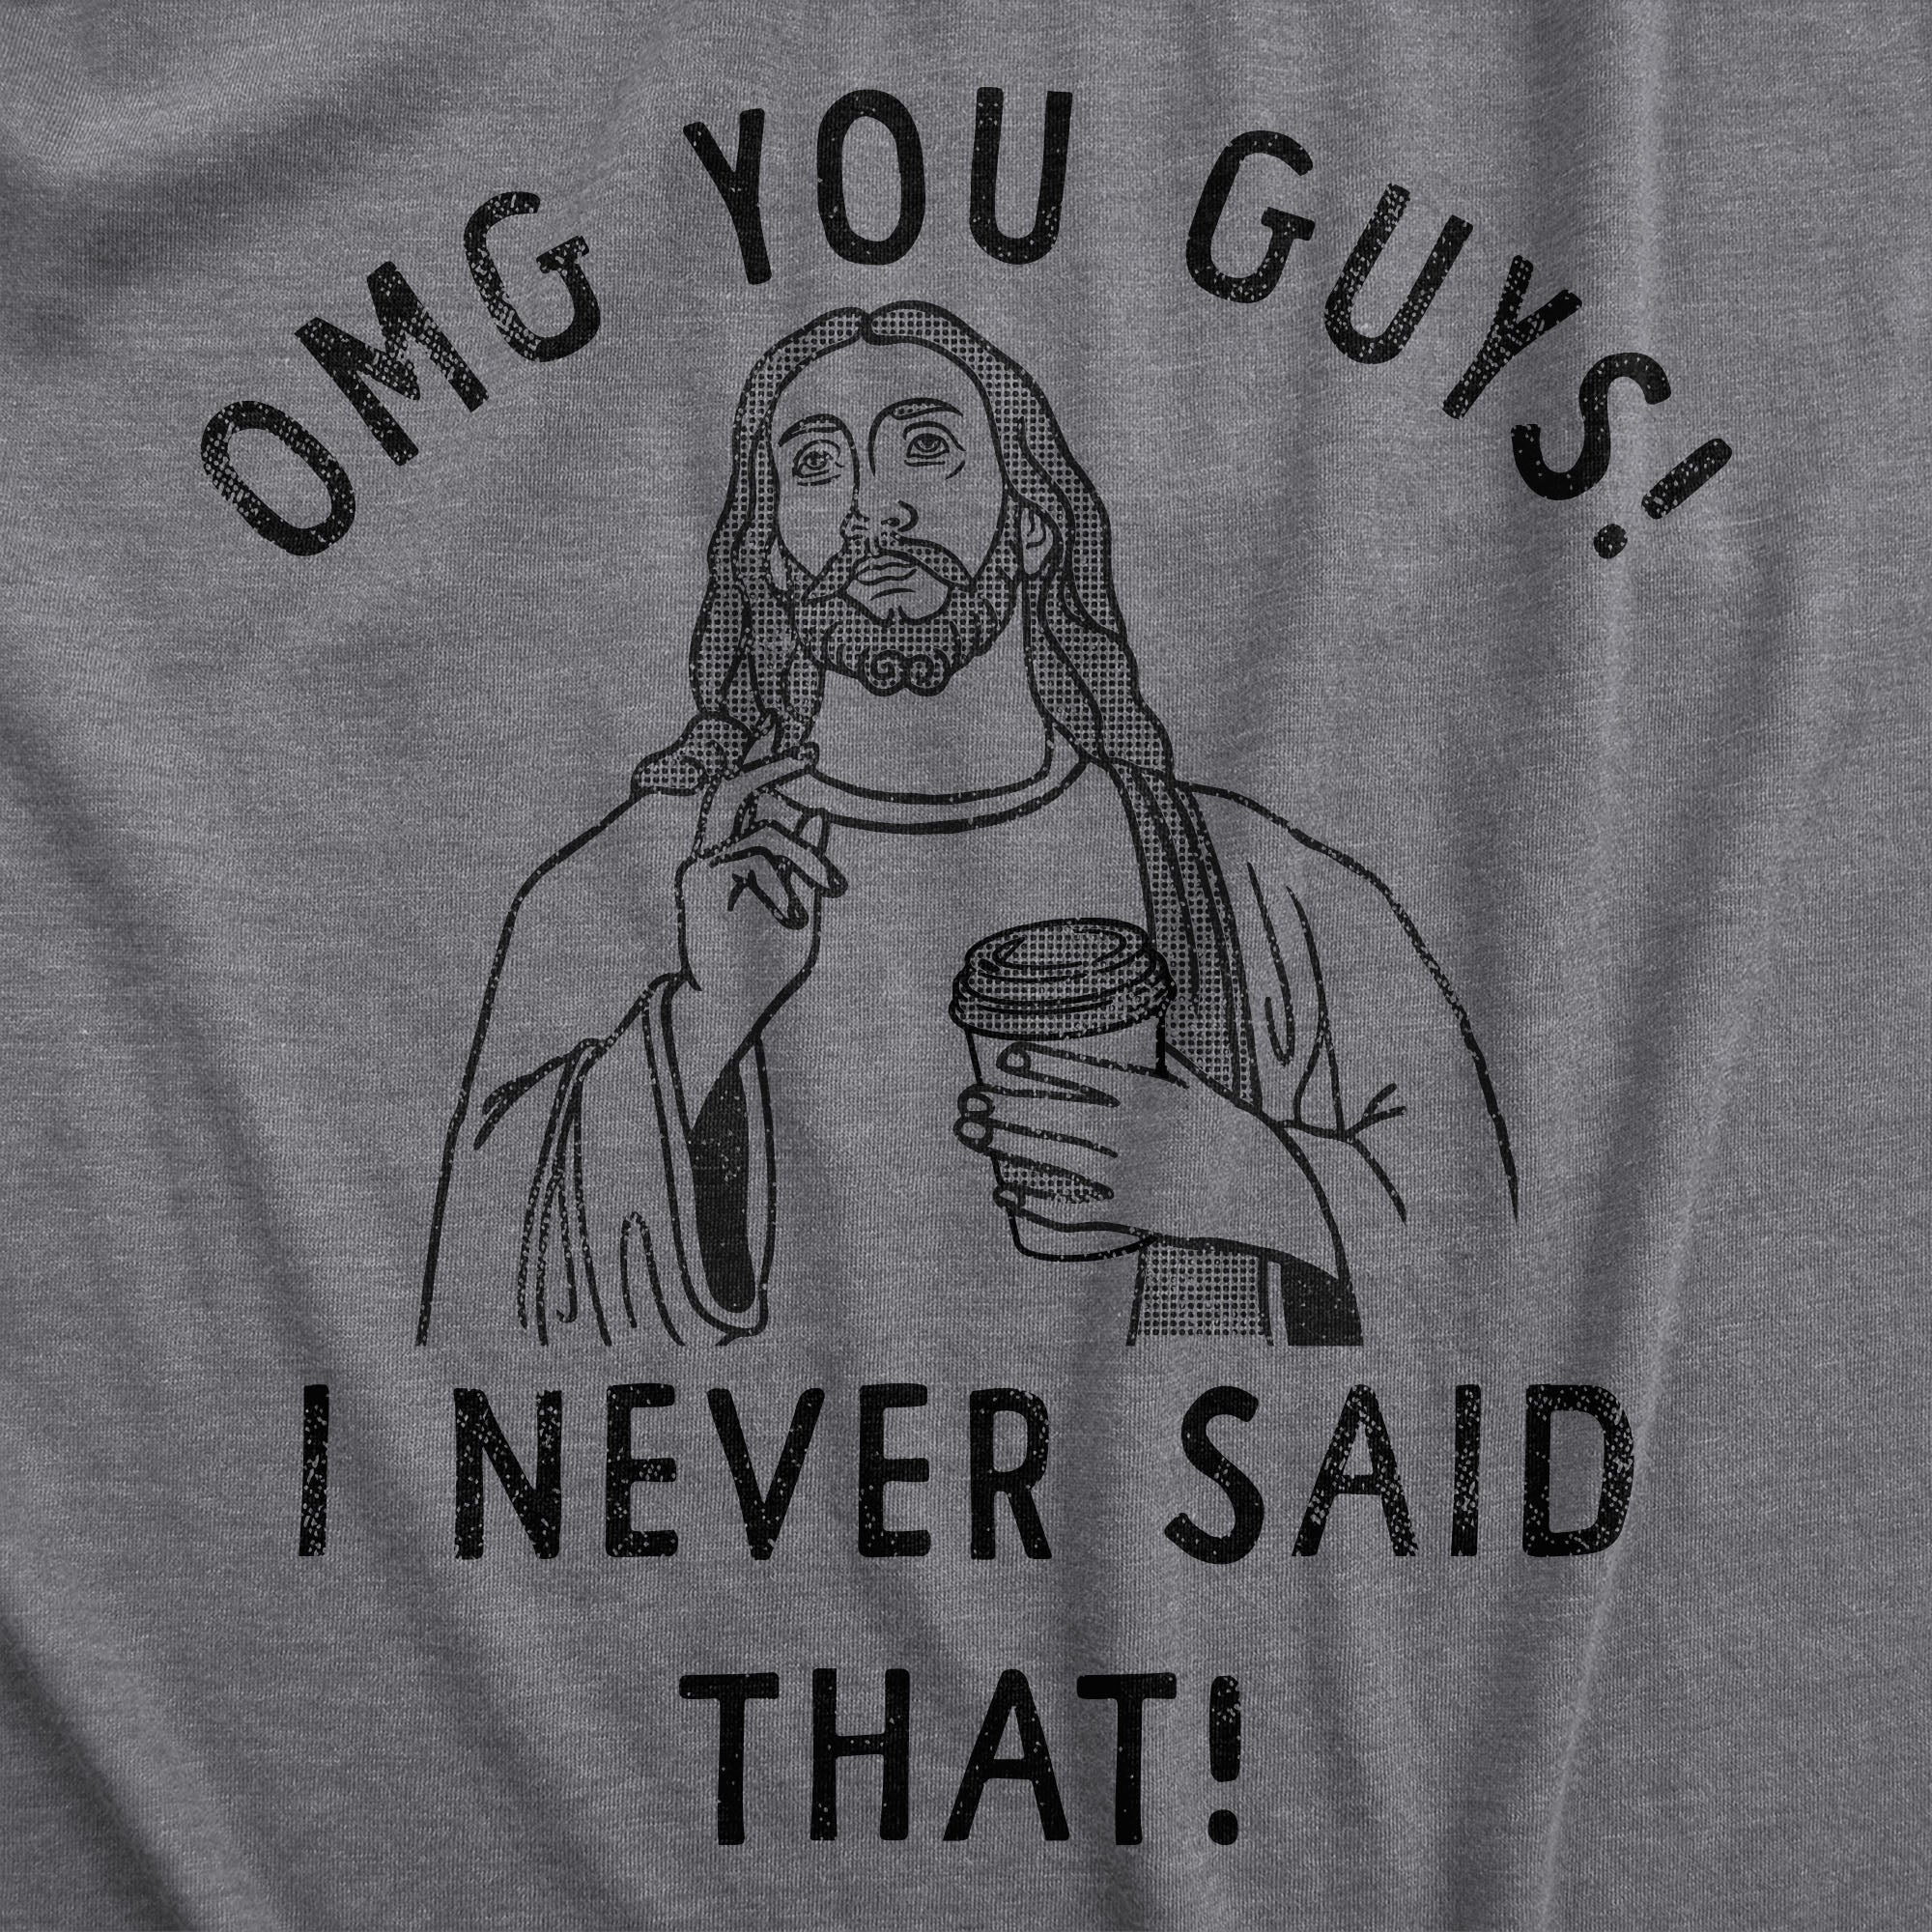 Funny Dark Heather Grey - OMG OMG You Guys I Never Said That Mens T Shirt Nerdy Sarcastic Religion Tee